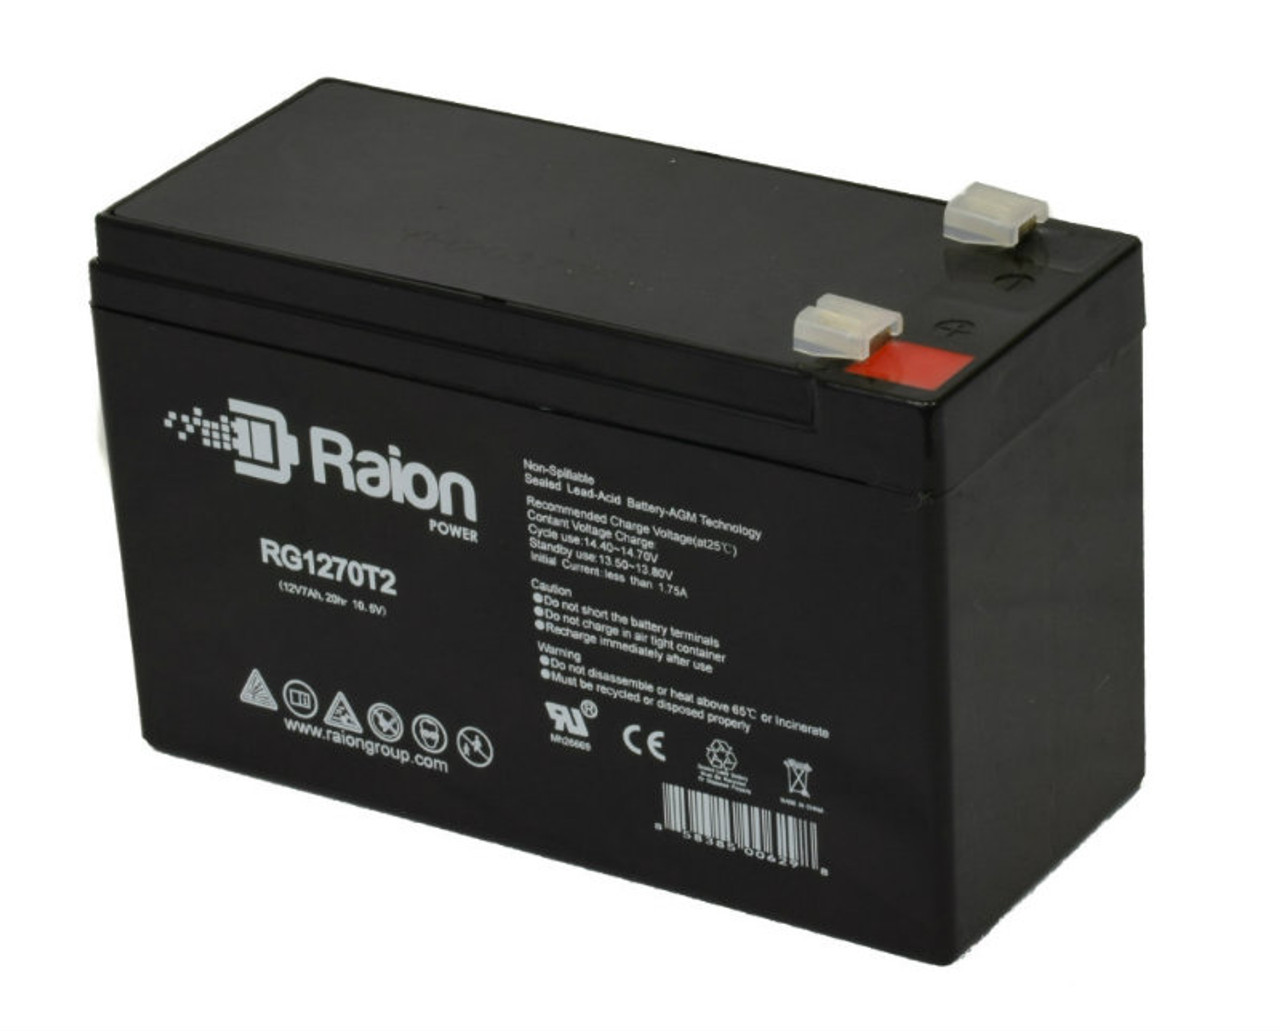 Raion Power Replacement 12V 7Ah RG1270T1 Fire Alarm Battery for Altronix AL600ULMR